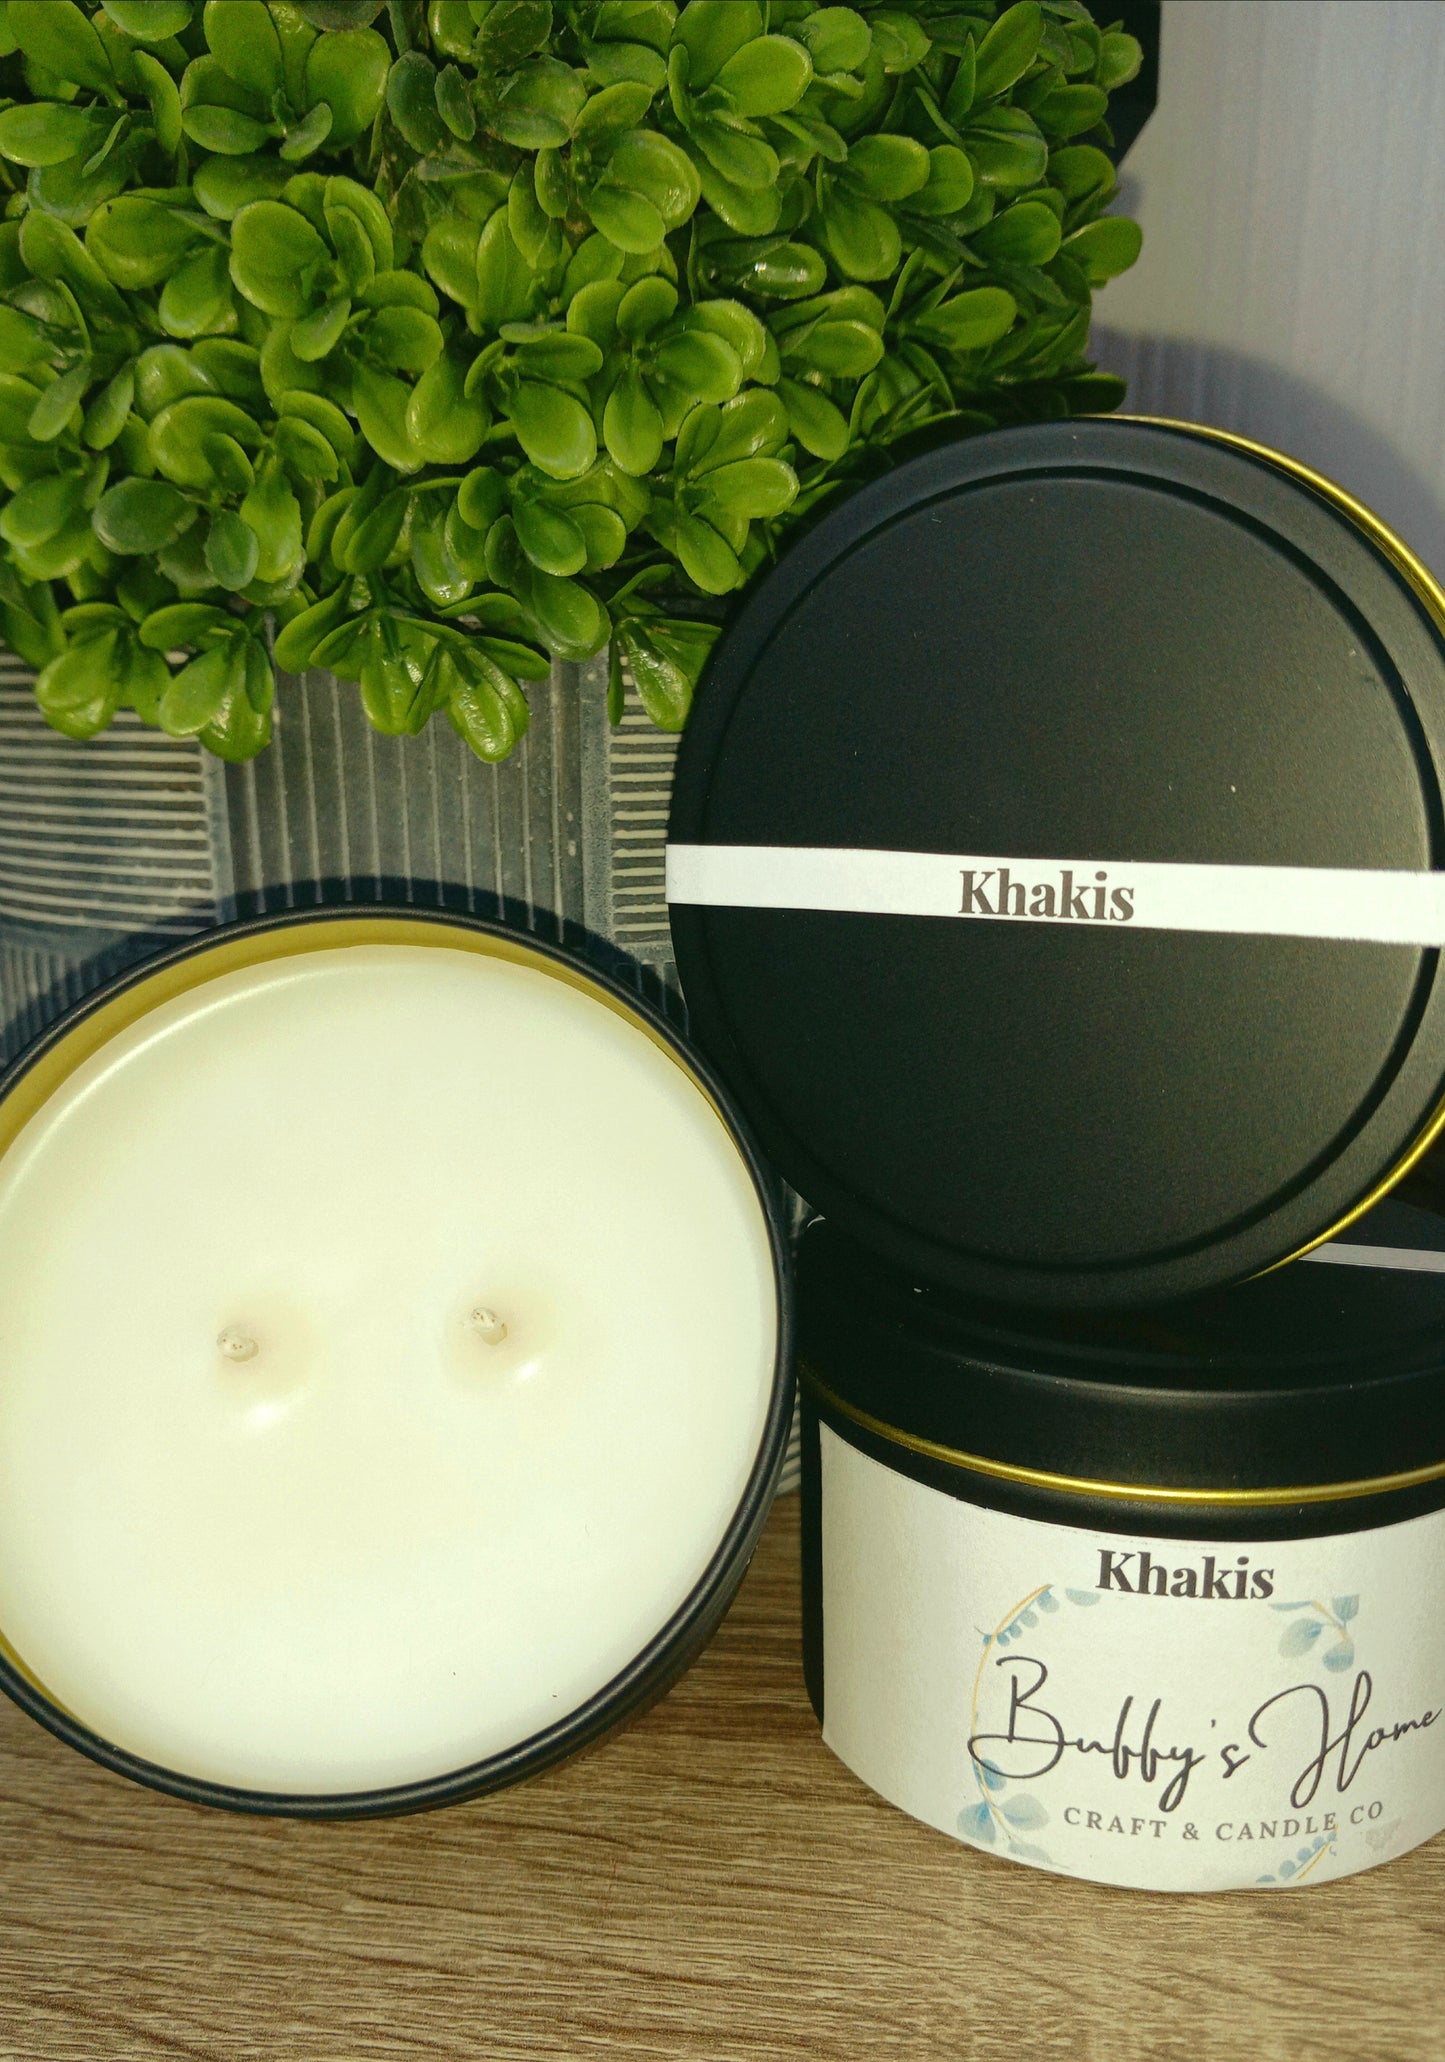 Khakis Men's fragrance Type (Abercrombie & Fitch Fierce)